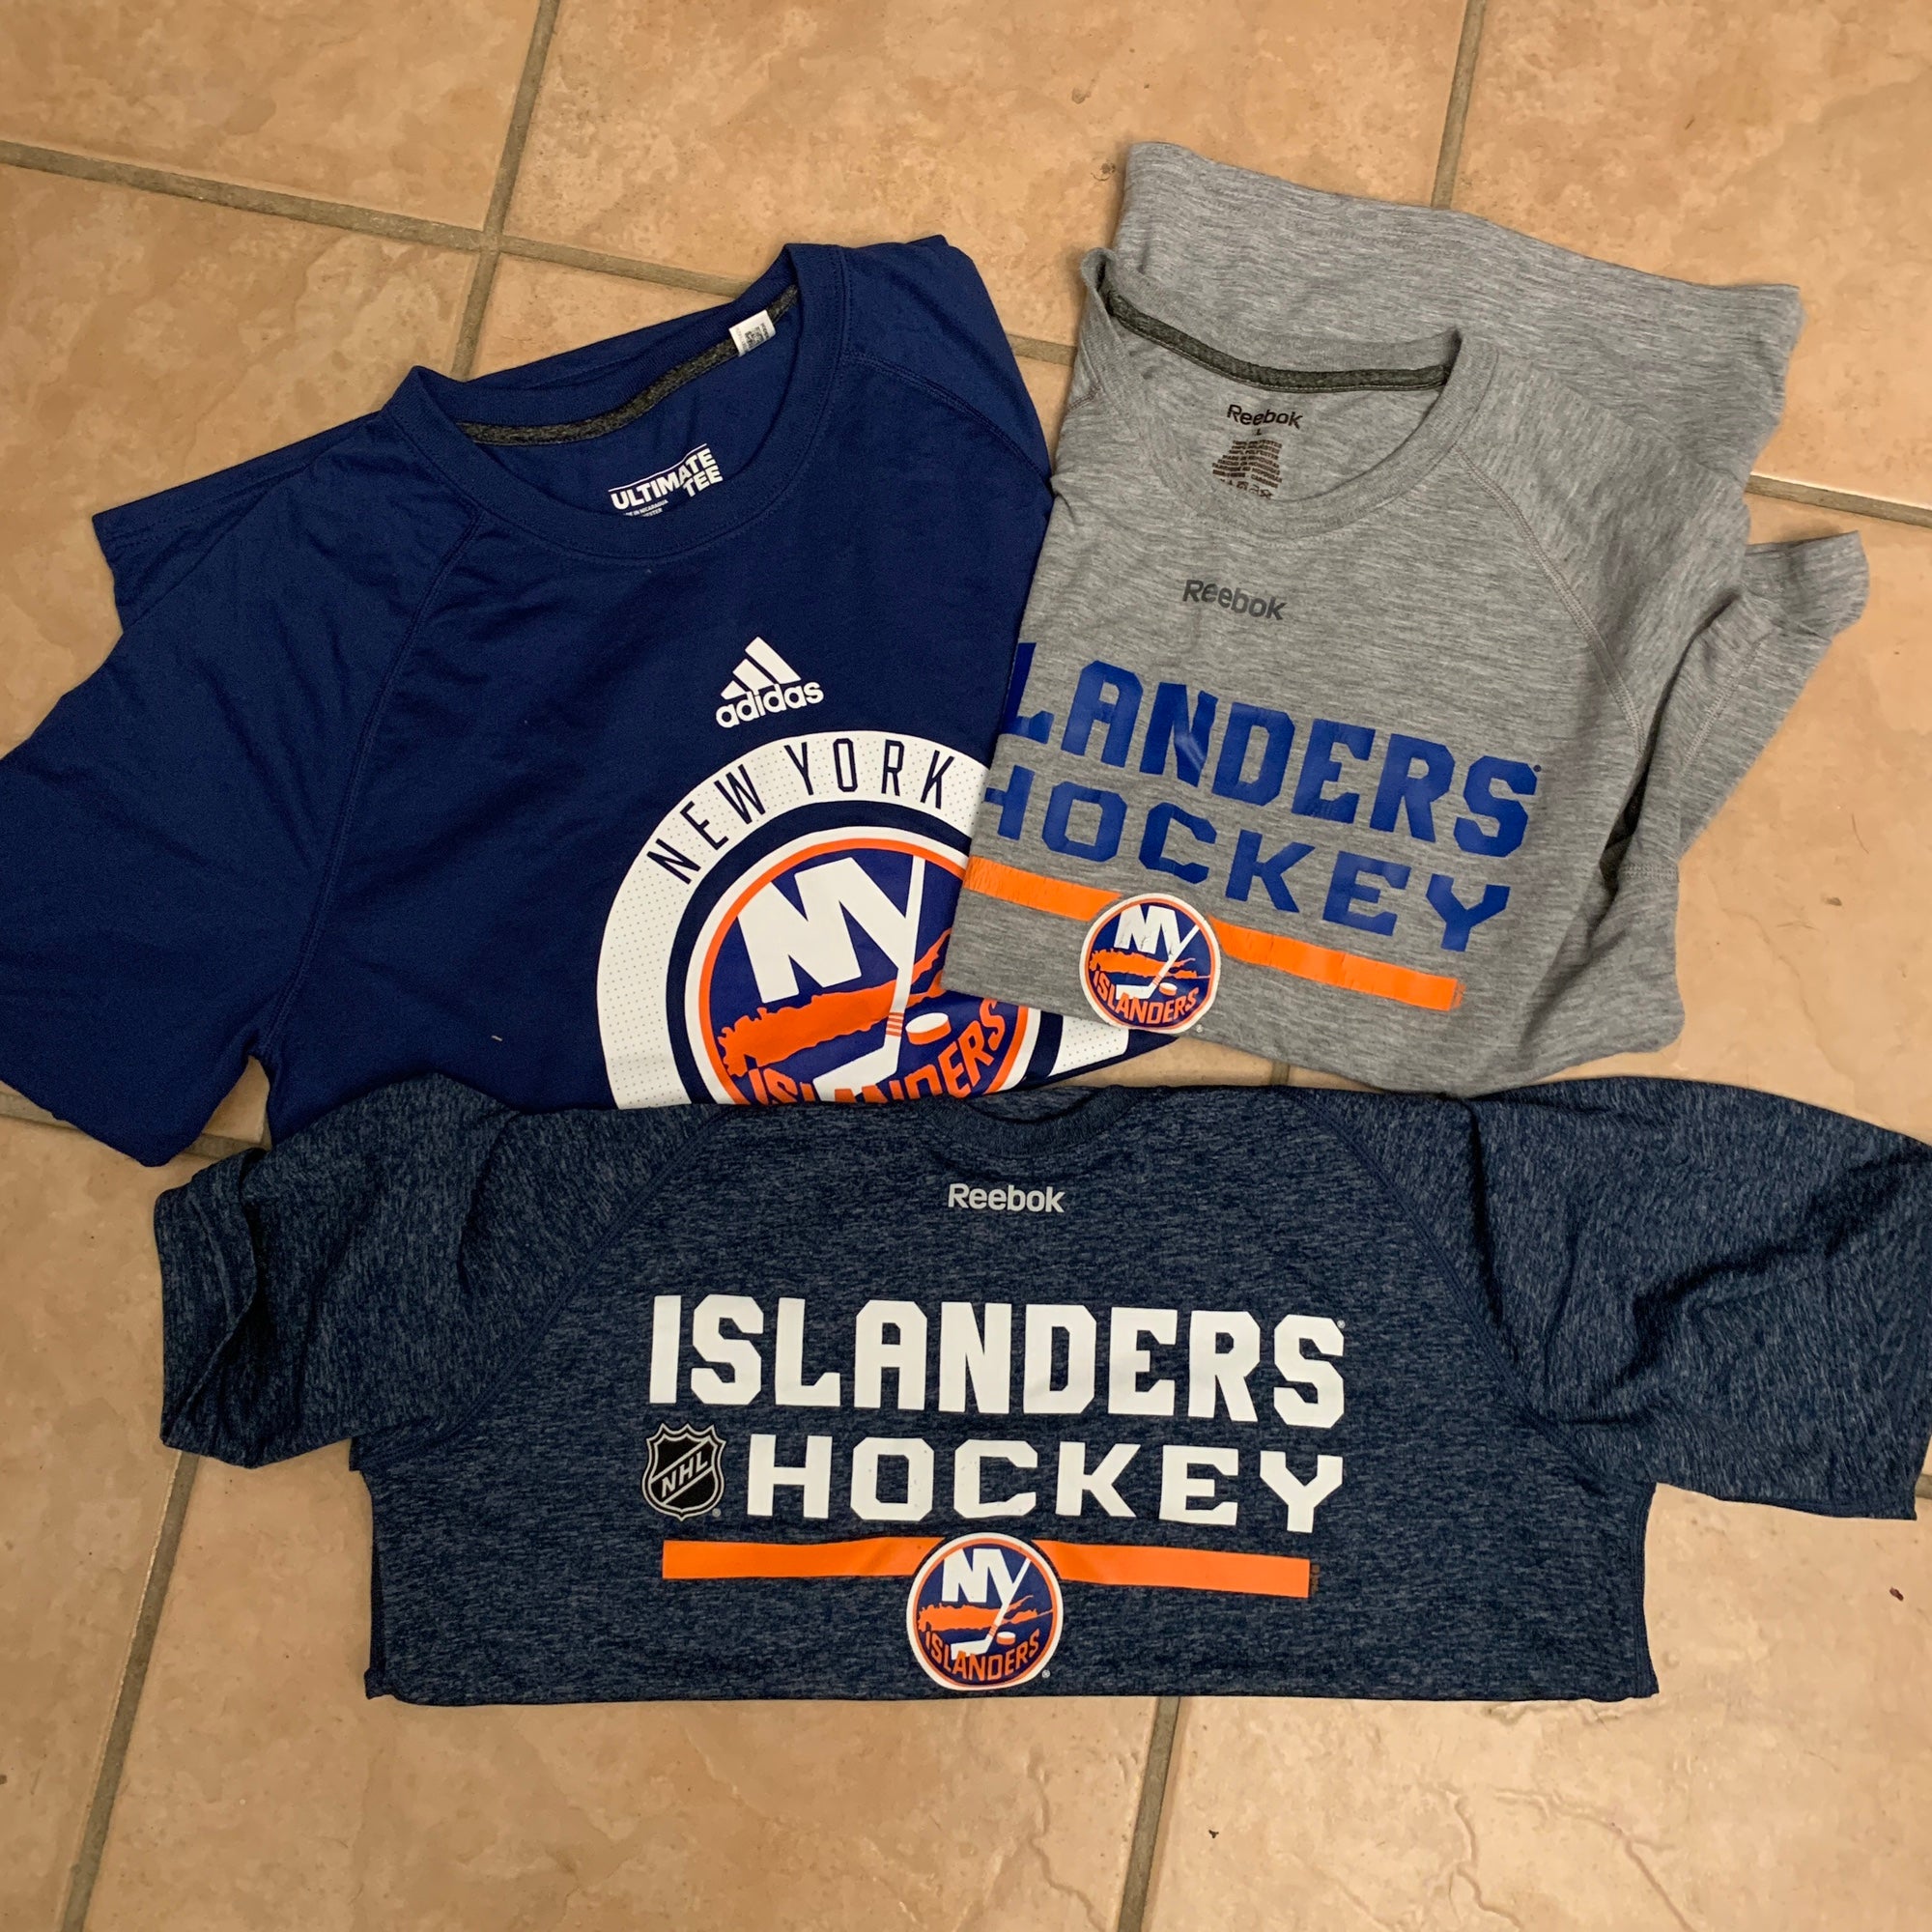 Adidas Ultimate Tee Blue New York Rangers Hockey T-Shirt Size M